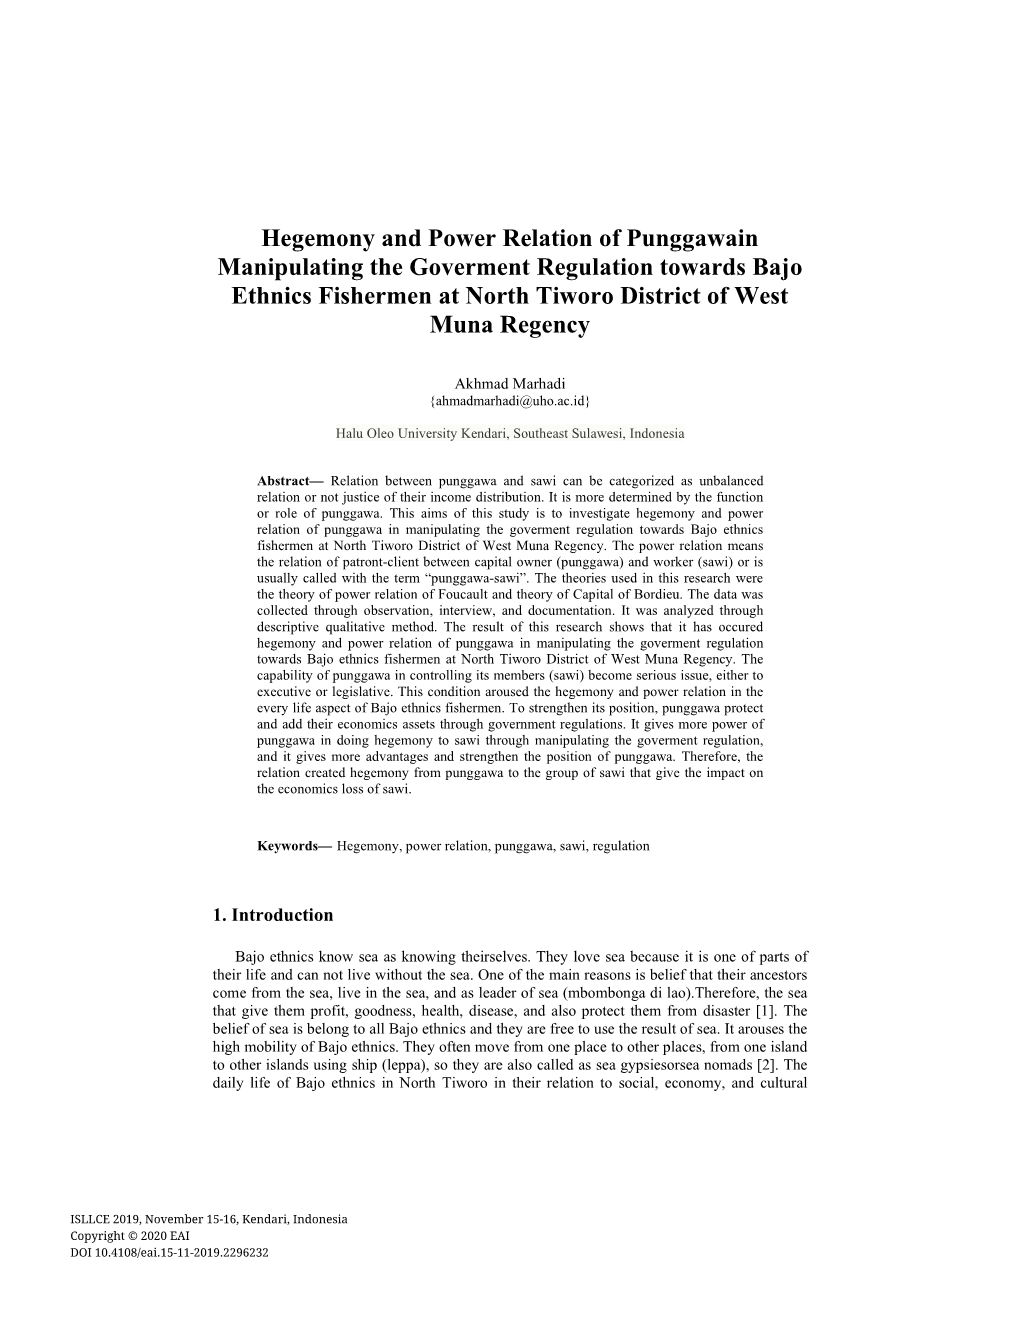 Hegemony and Power Relation of Punggawain Manipulating the Goverment Regulation Towards Bajo Ethnics Fishermen at North Tiworo District of West Muna Regency